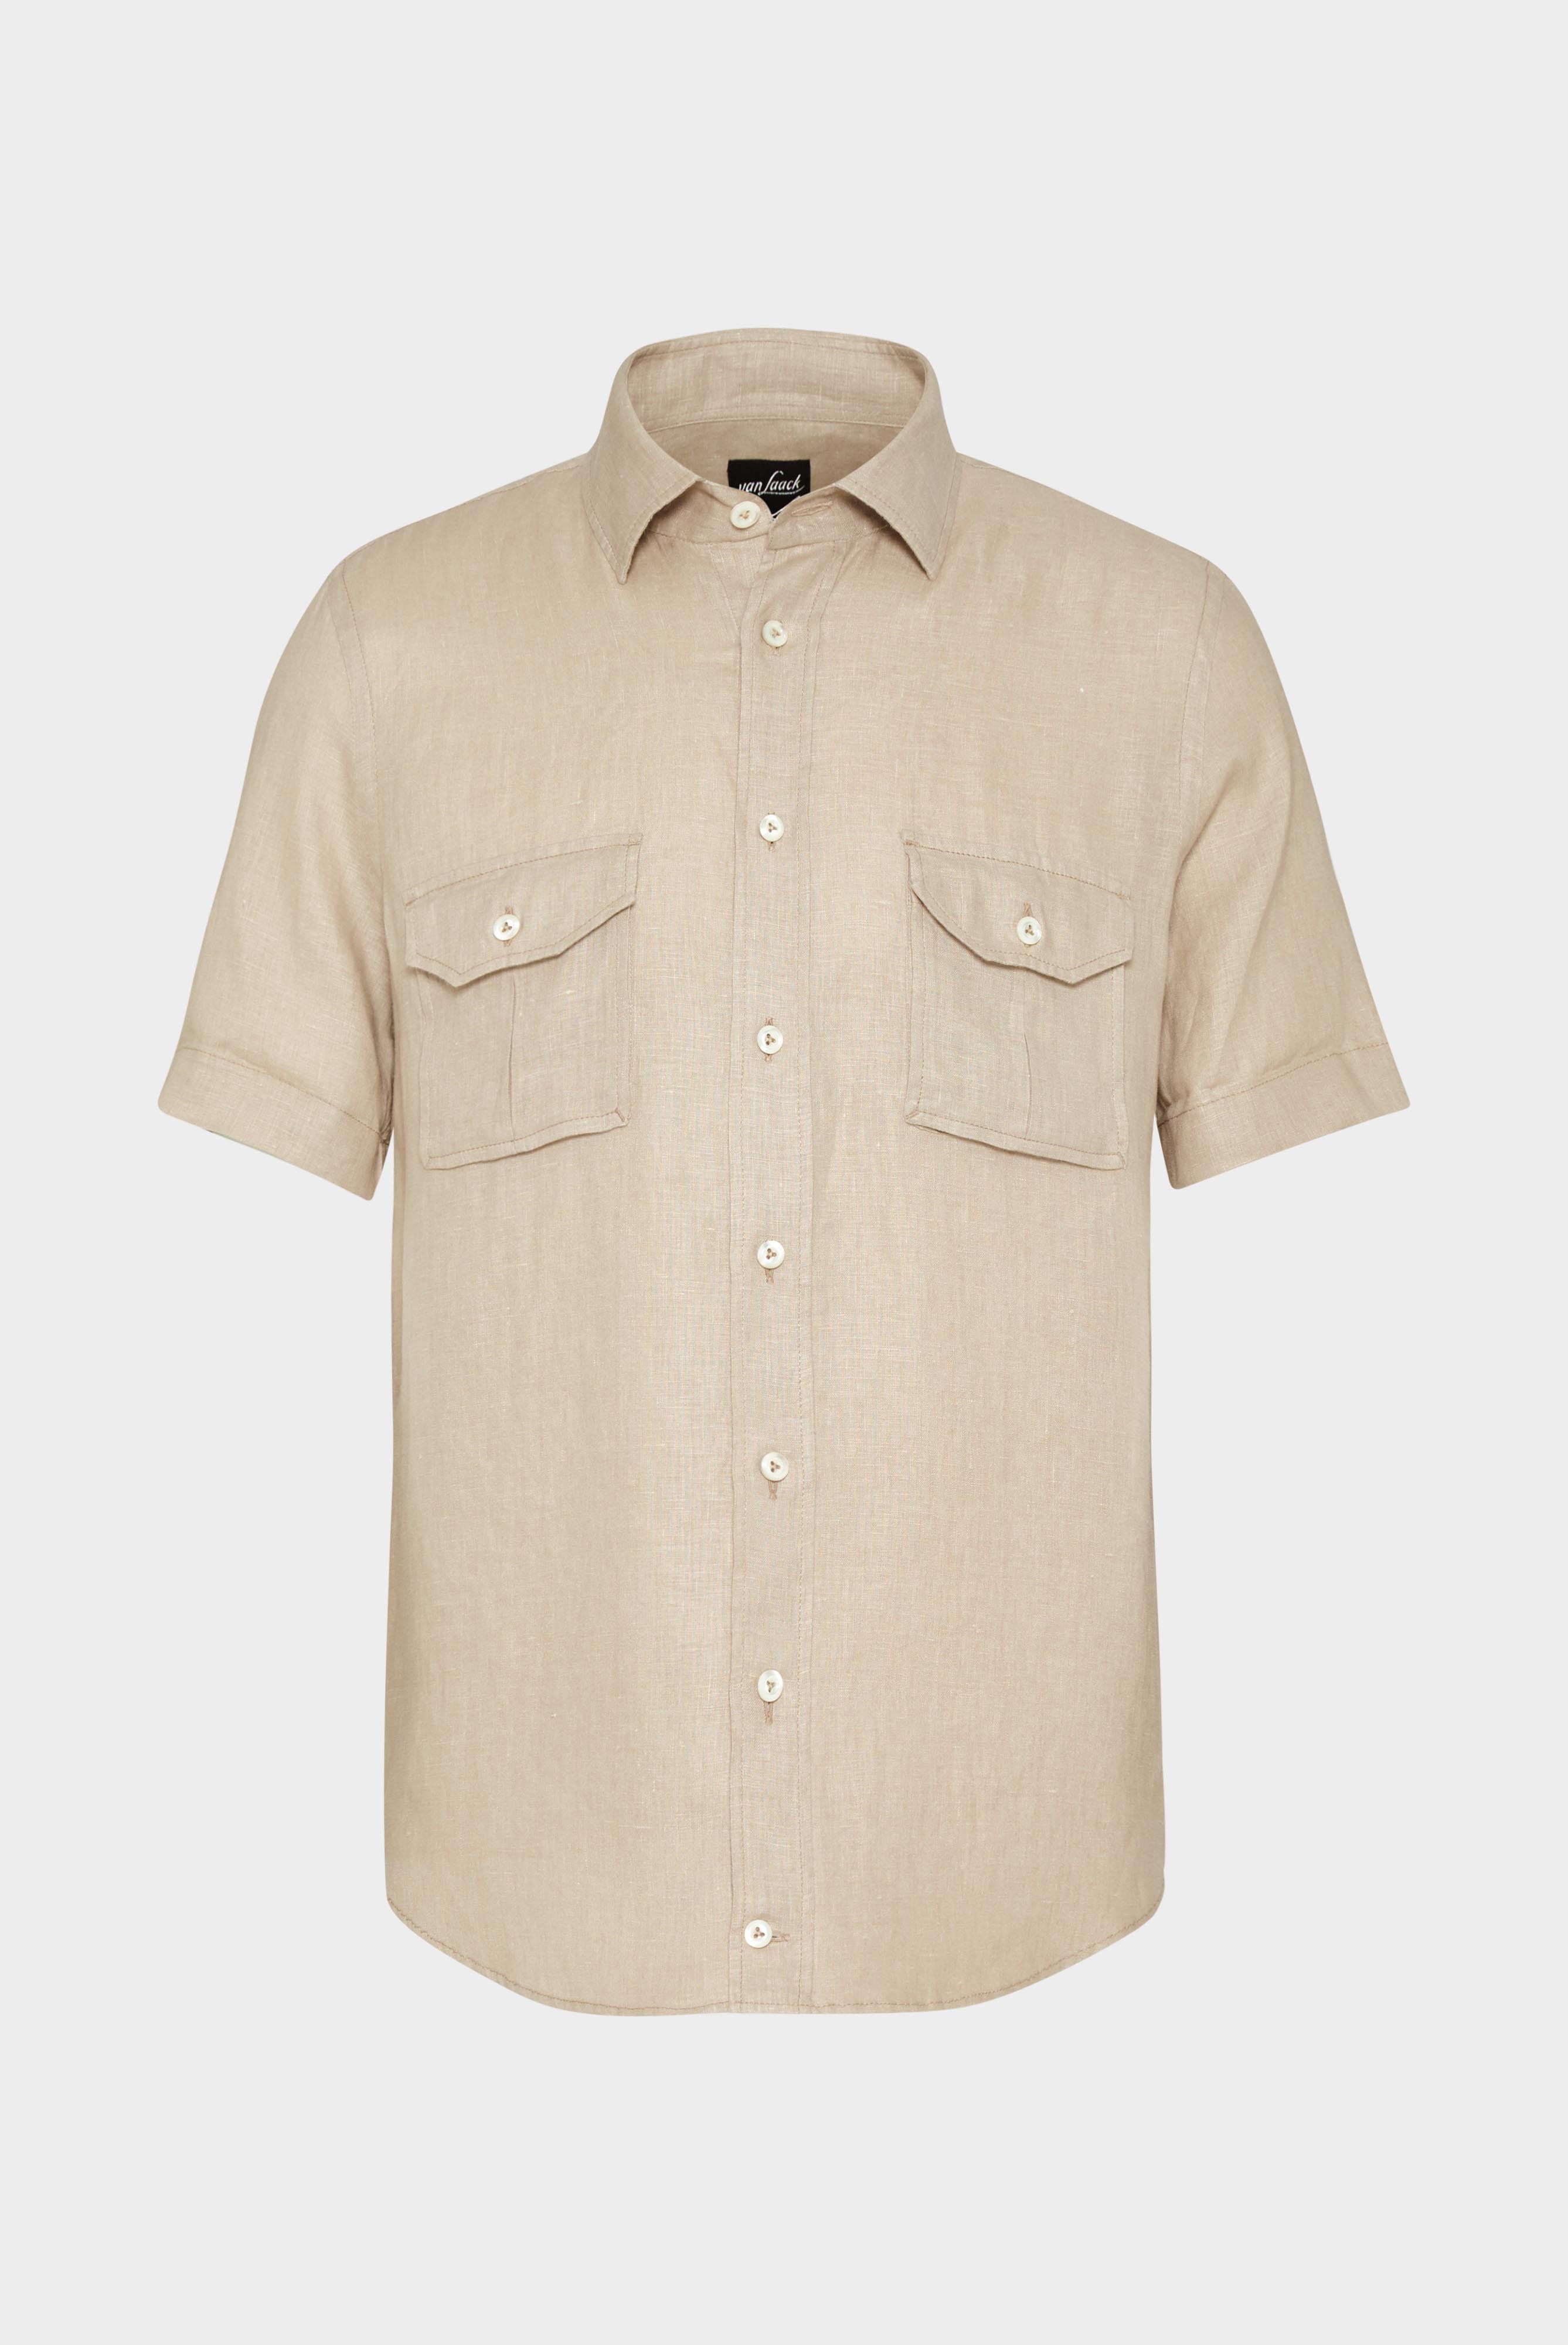 Short sleeve shirts+Super soft short-sleeved linen shirt in a boxy fit+20.2035.P8.150555.130.42